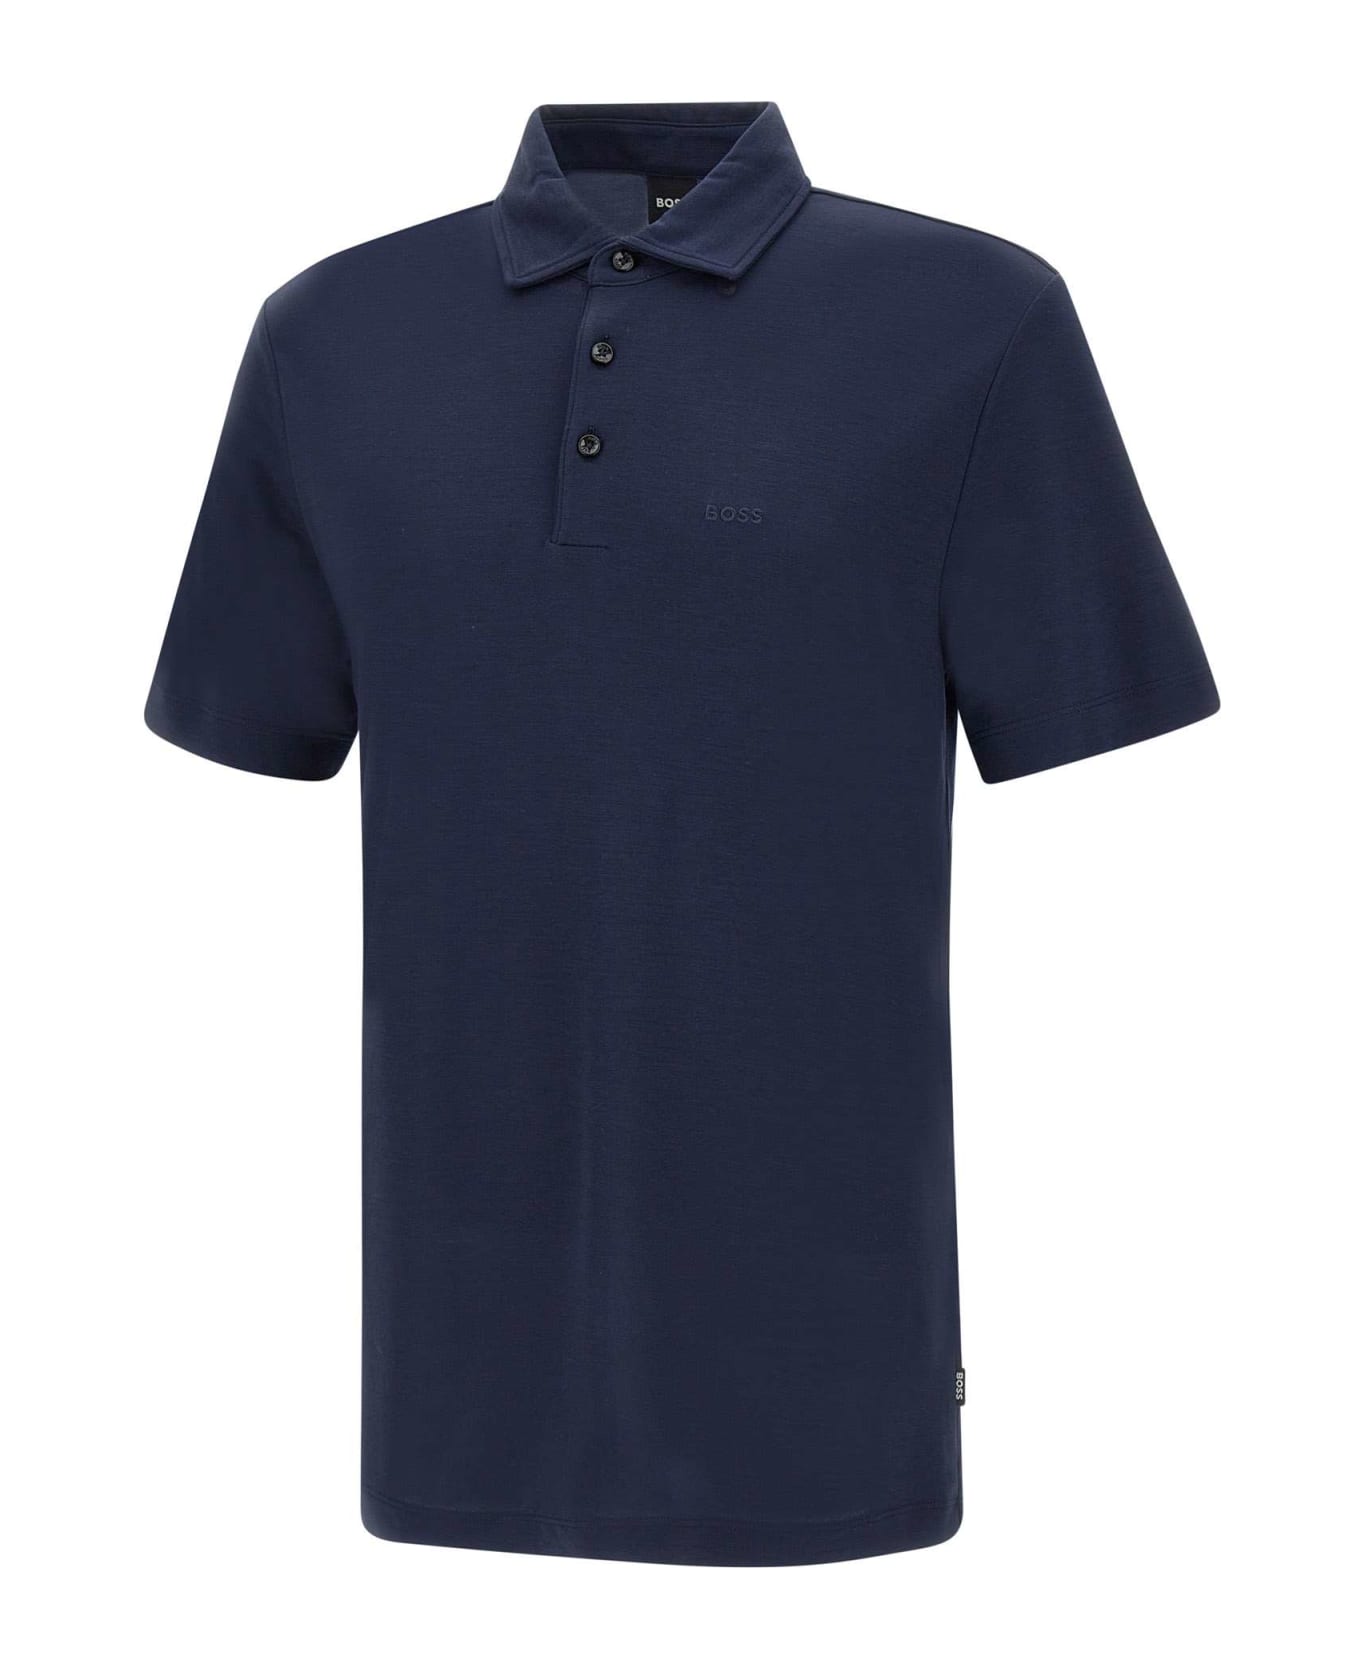 Hugo Boss "press55" Cotton Polo Shirt - BLUE ポロシャツ